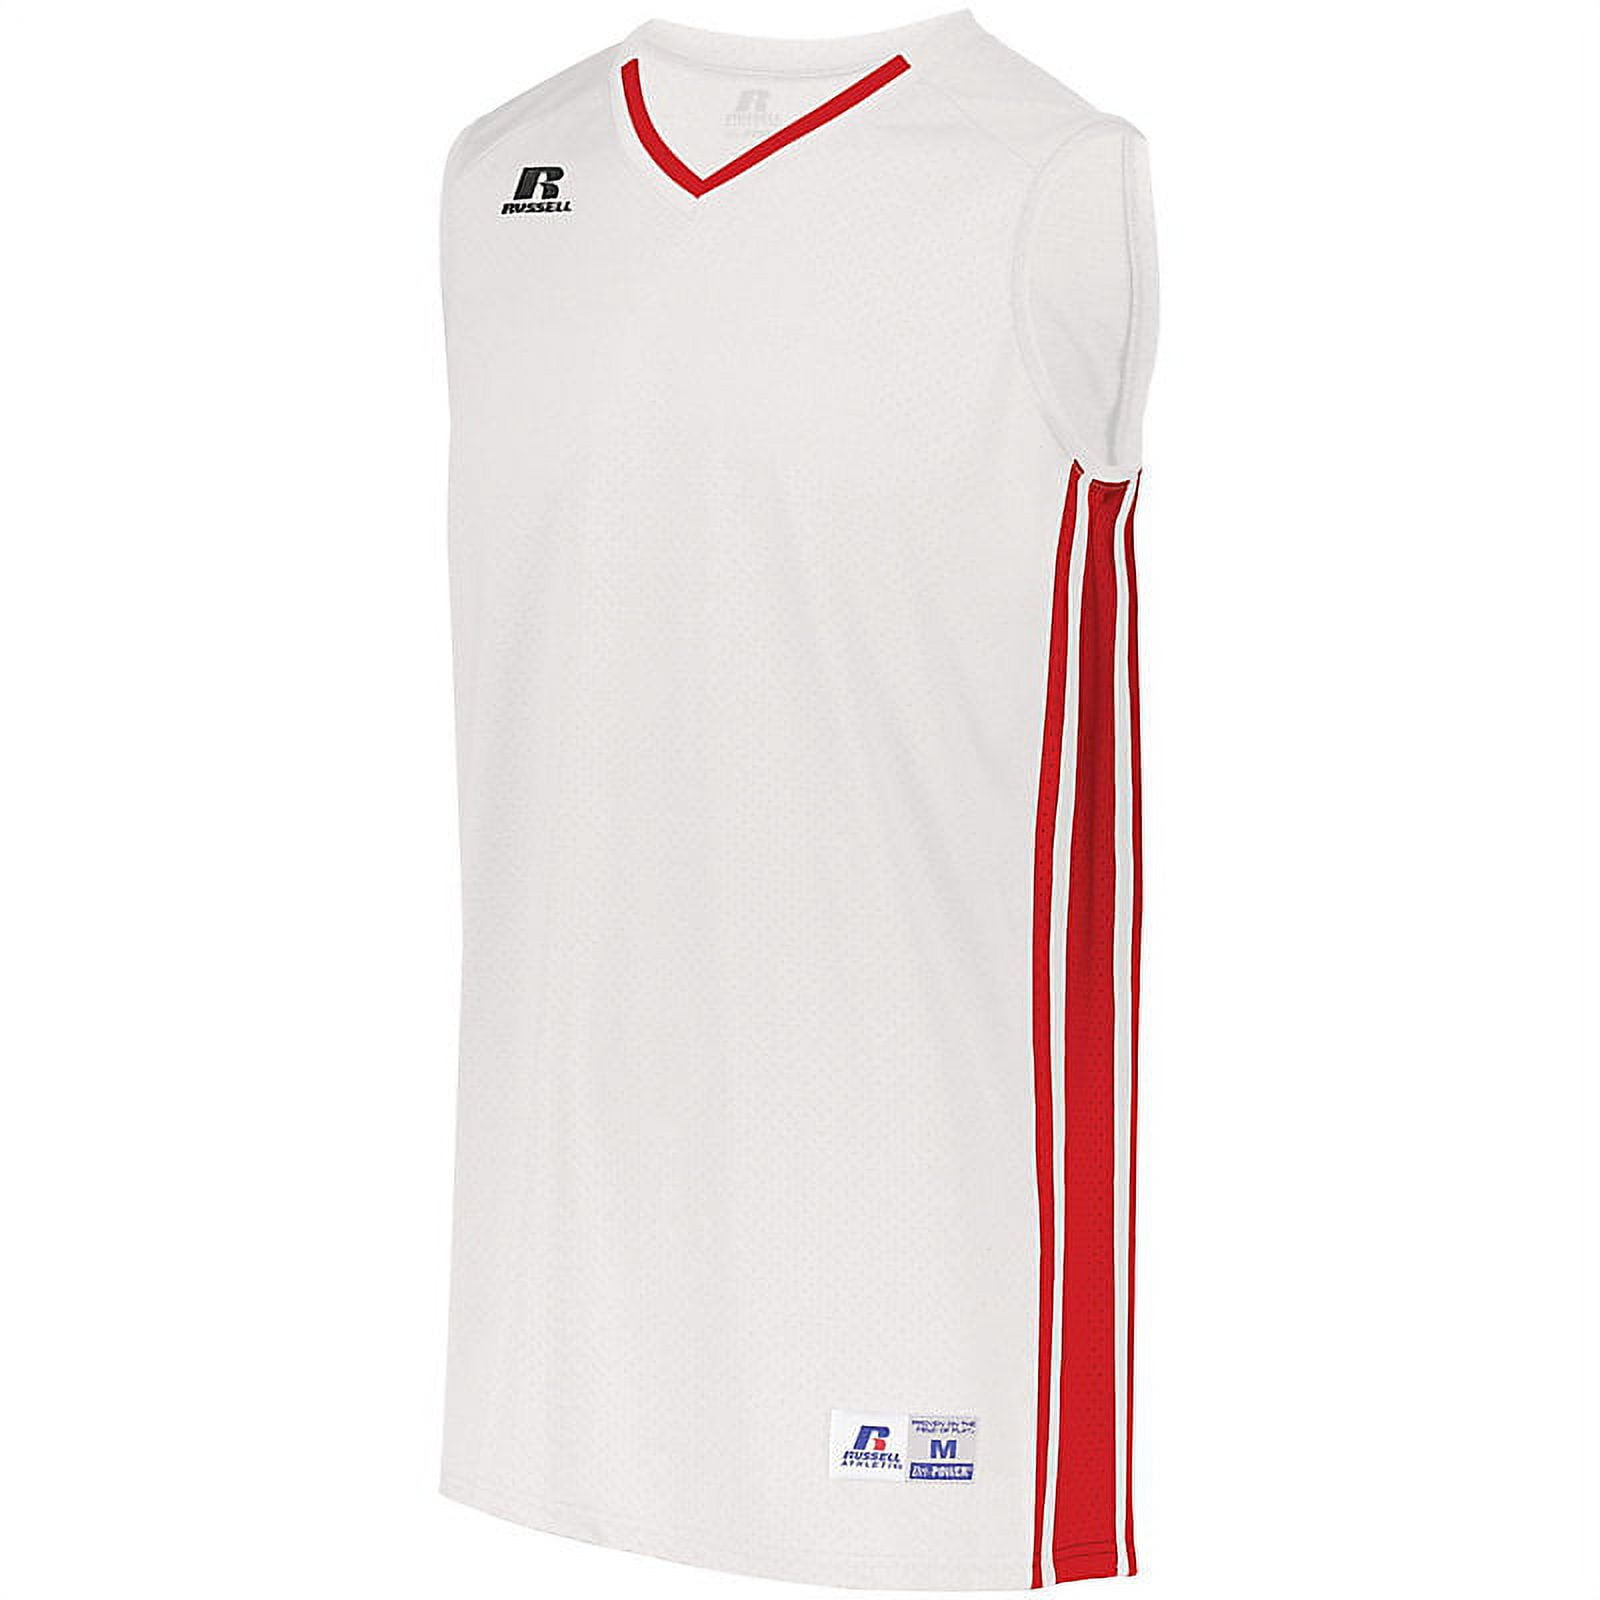 US Soccer Nike Basketball Jersey - White